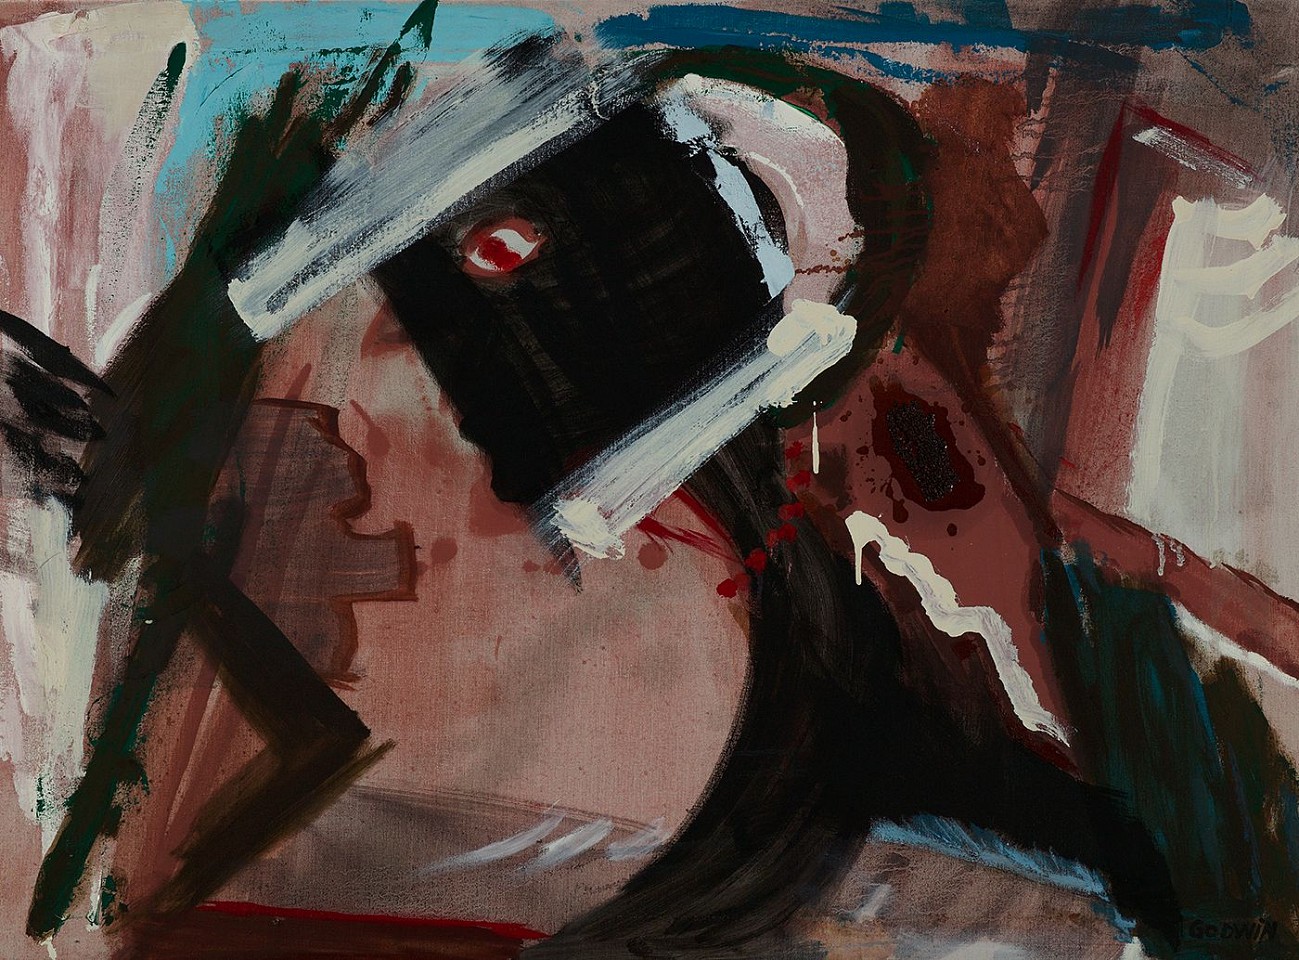 Judith Godwin, Run from Evil | SOLD, 1989
Oil on canvas, 30 x 40 in. (76.2 x 101.6 cm)
GOD-00028